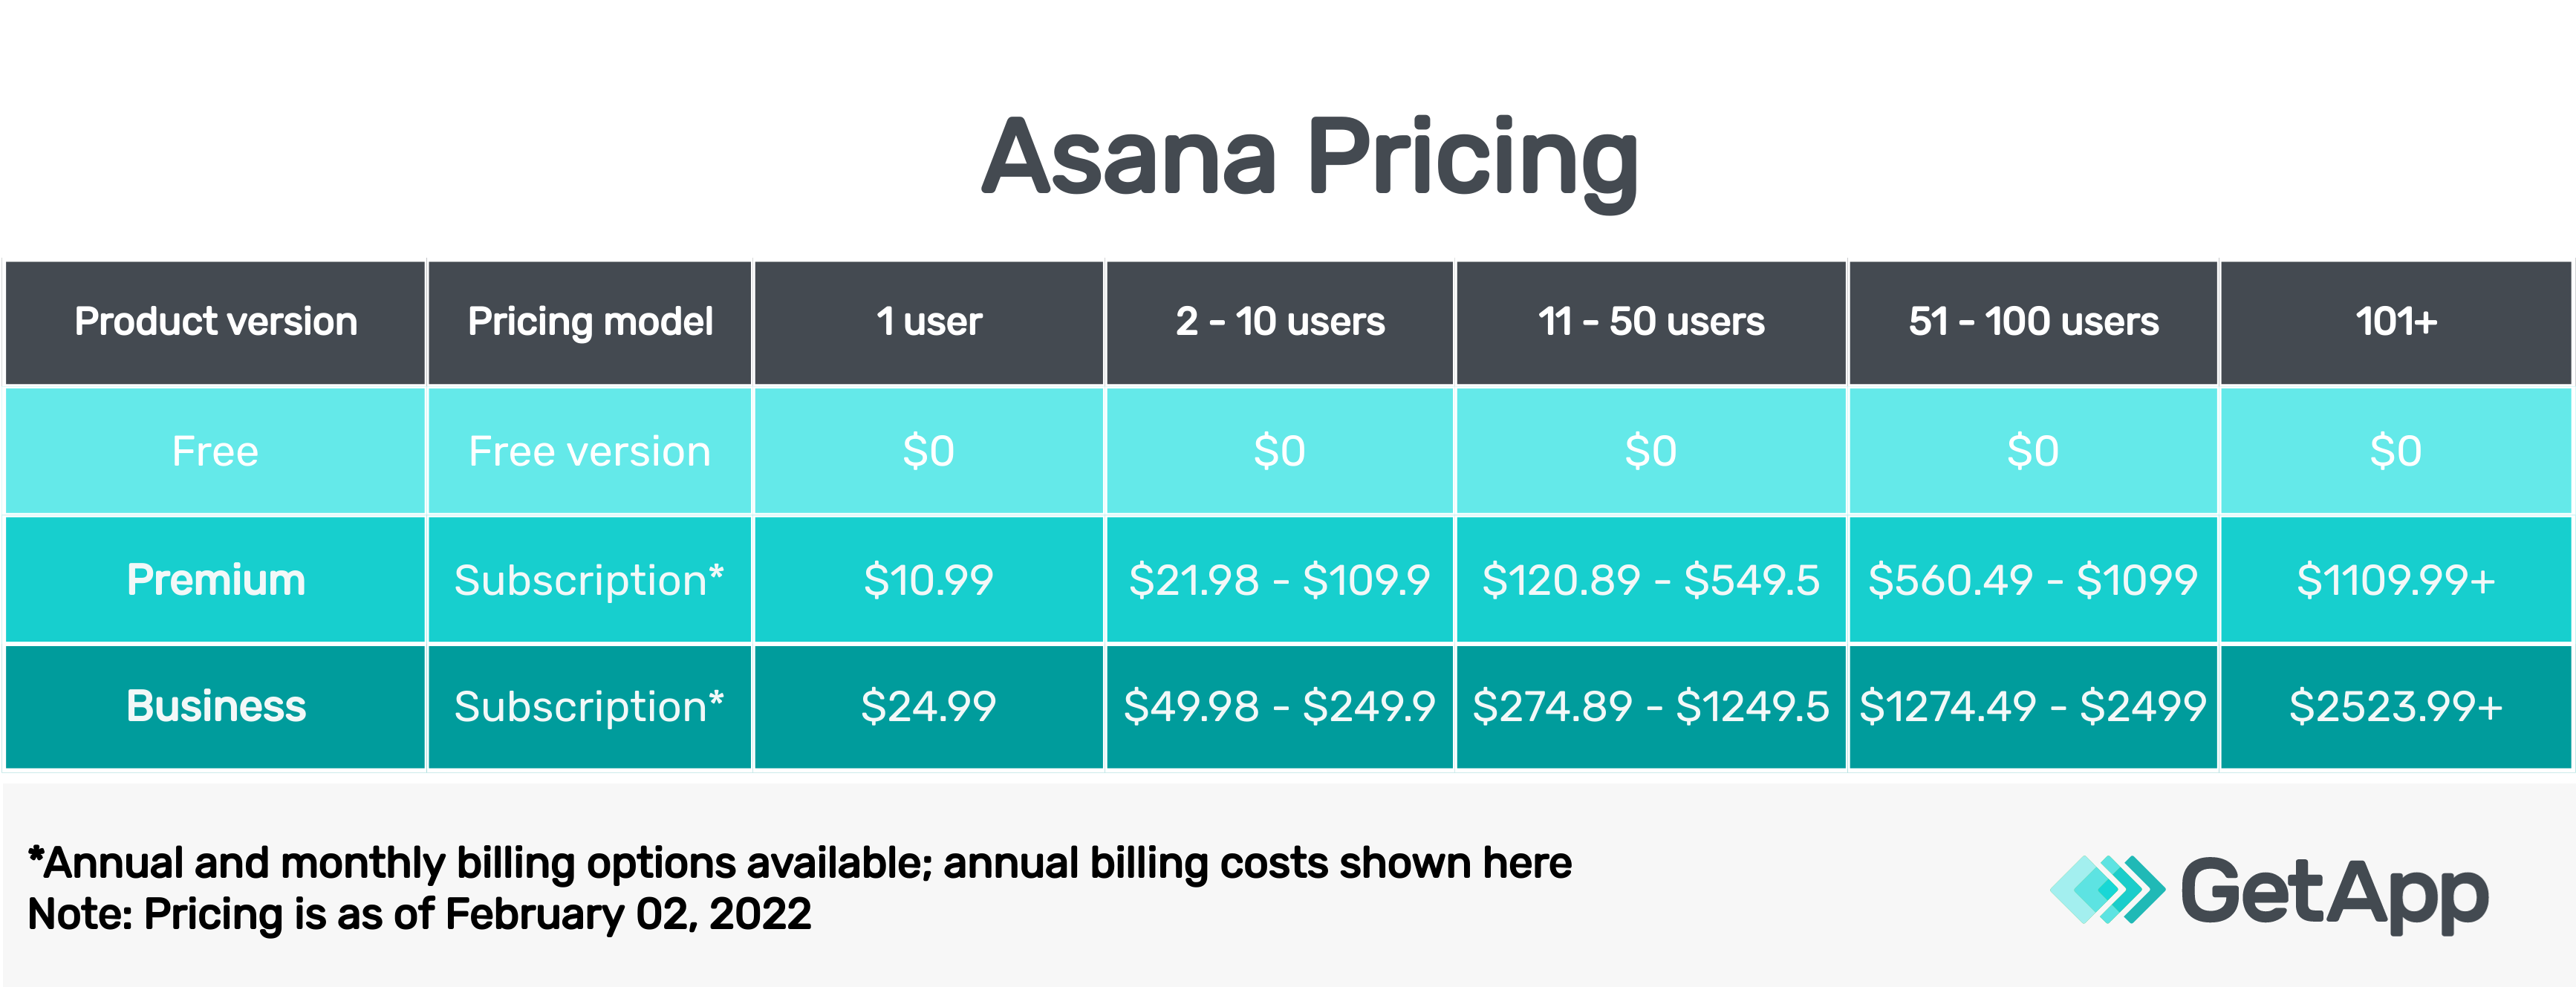 Asana pricing